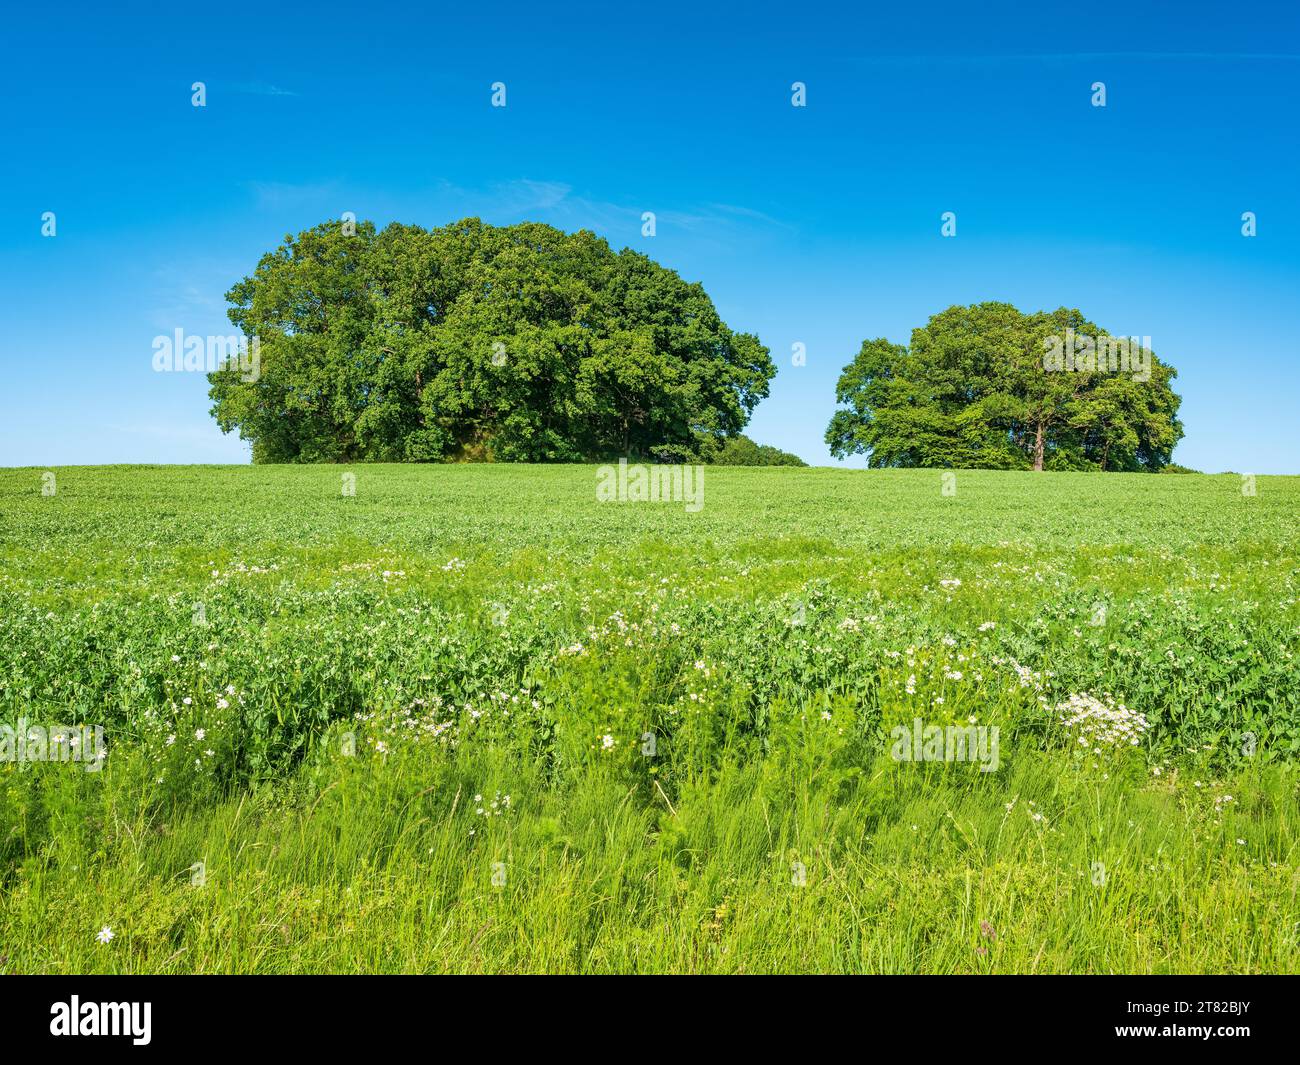 Green field with Bronze Age burial mounds under a blue sky, Woorker Berge burial mound, Ruegen Island, Mecklenburg-Western Pomerania, Germany Stock Photo